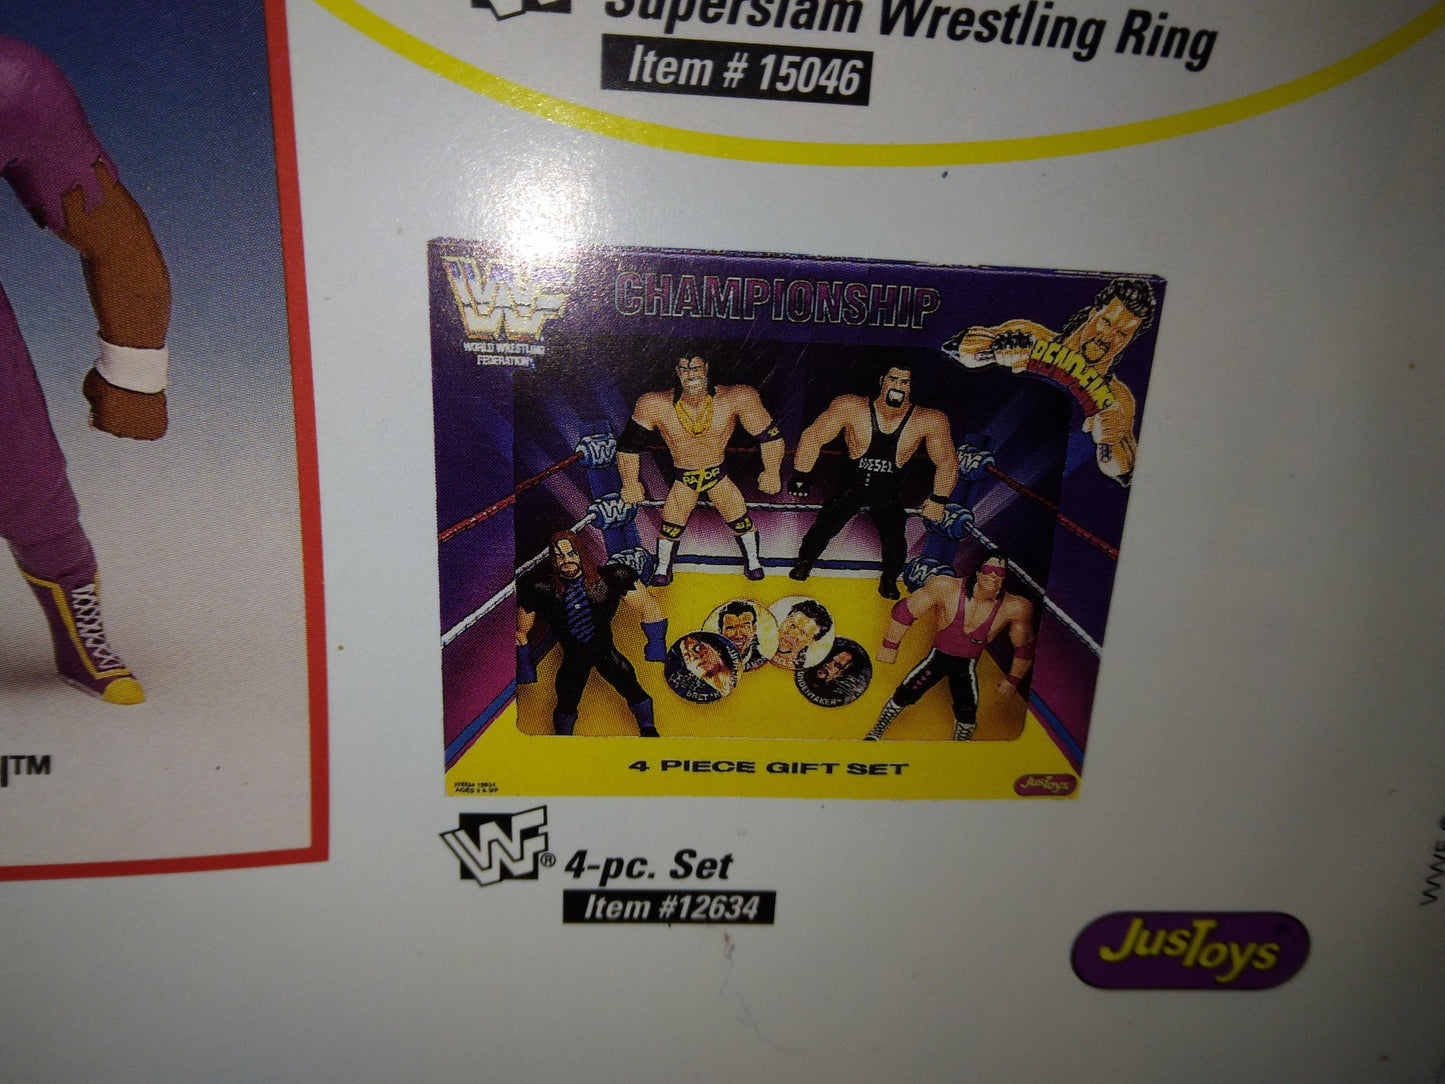 Unreleased WWF Just Toys Bend-Ems Championship 4-Piece Gift Set [With Undertaker, Razor Ramon, Diesel & Bret "Hit Man" Hart]